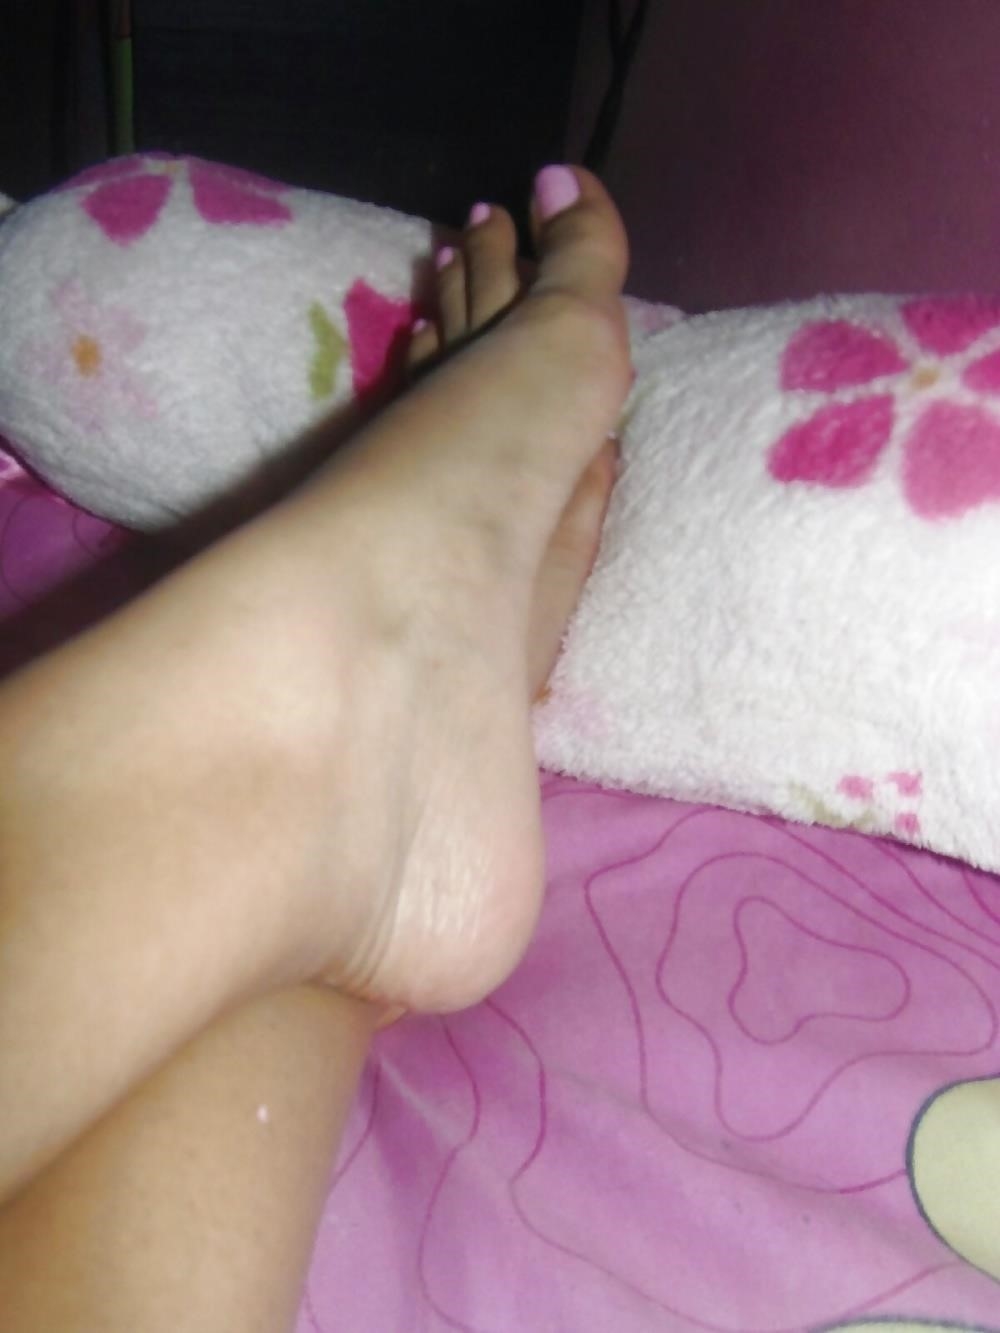 Mistress brazil feet-3277